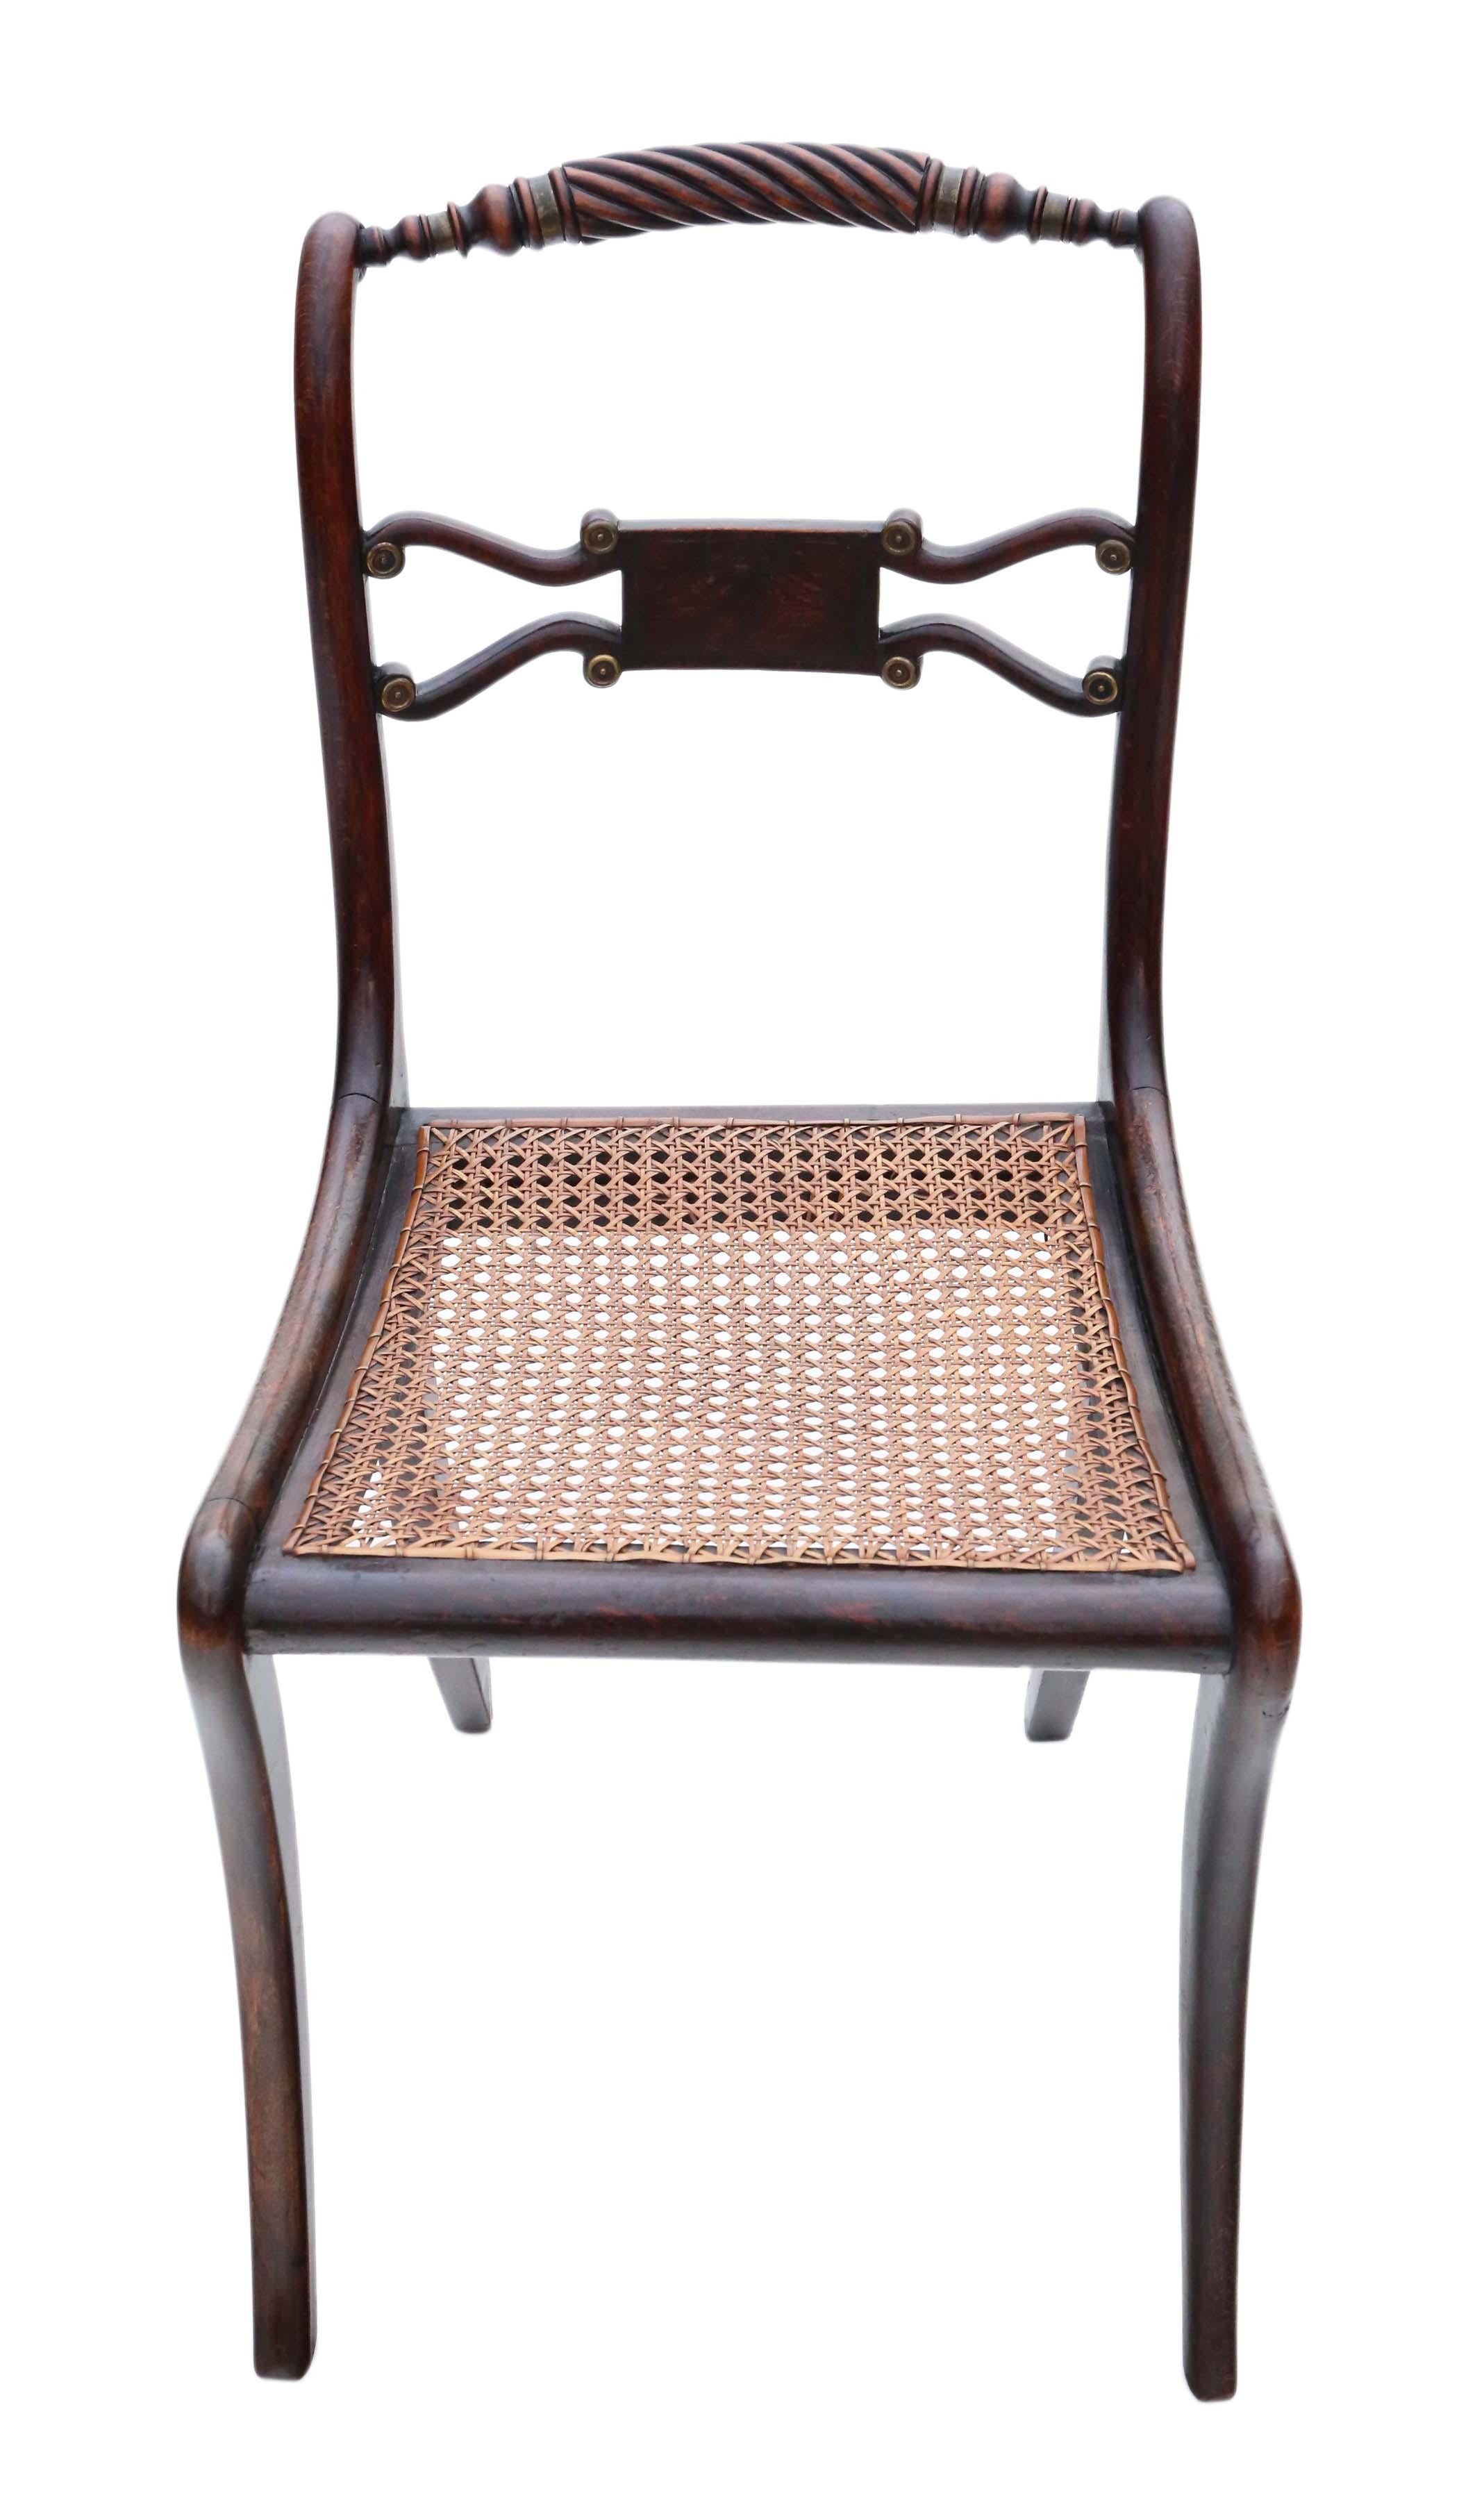 Esszimmerstühle aus Rosenholz im Regency-Stil: 8er-Set, antike Qualität, 19. Jahrhundert (Holz) im Angebot